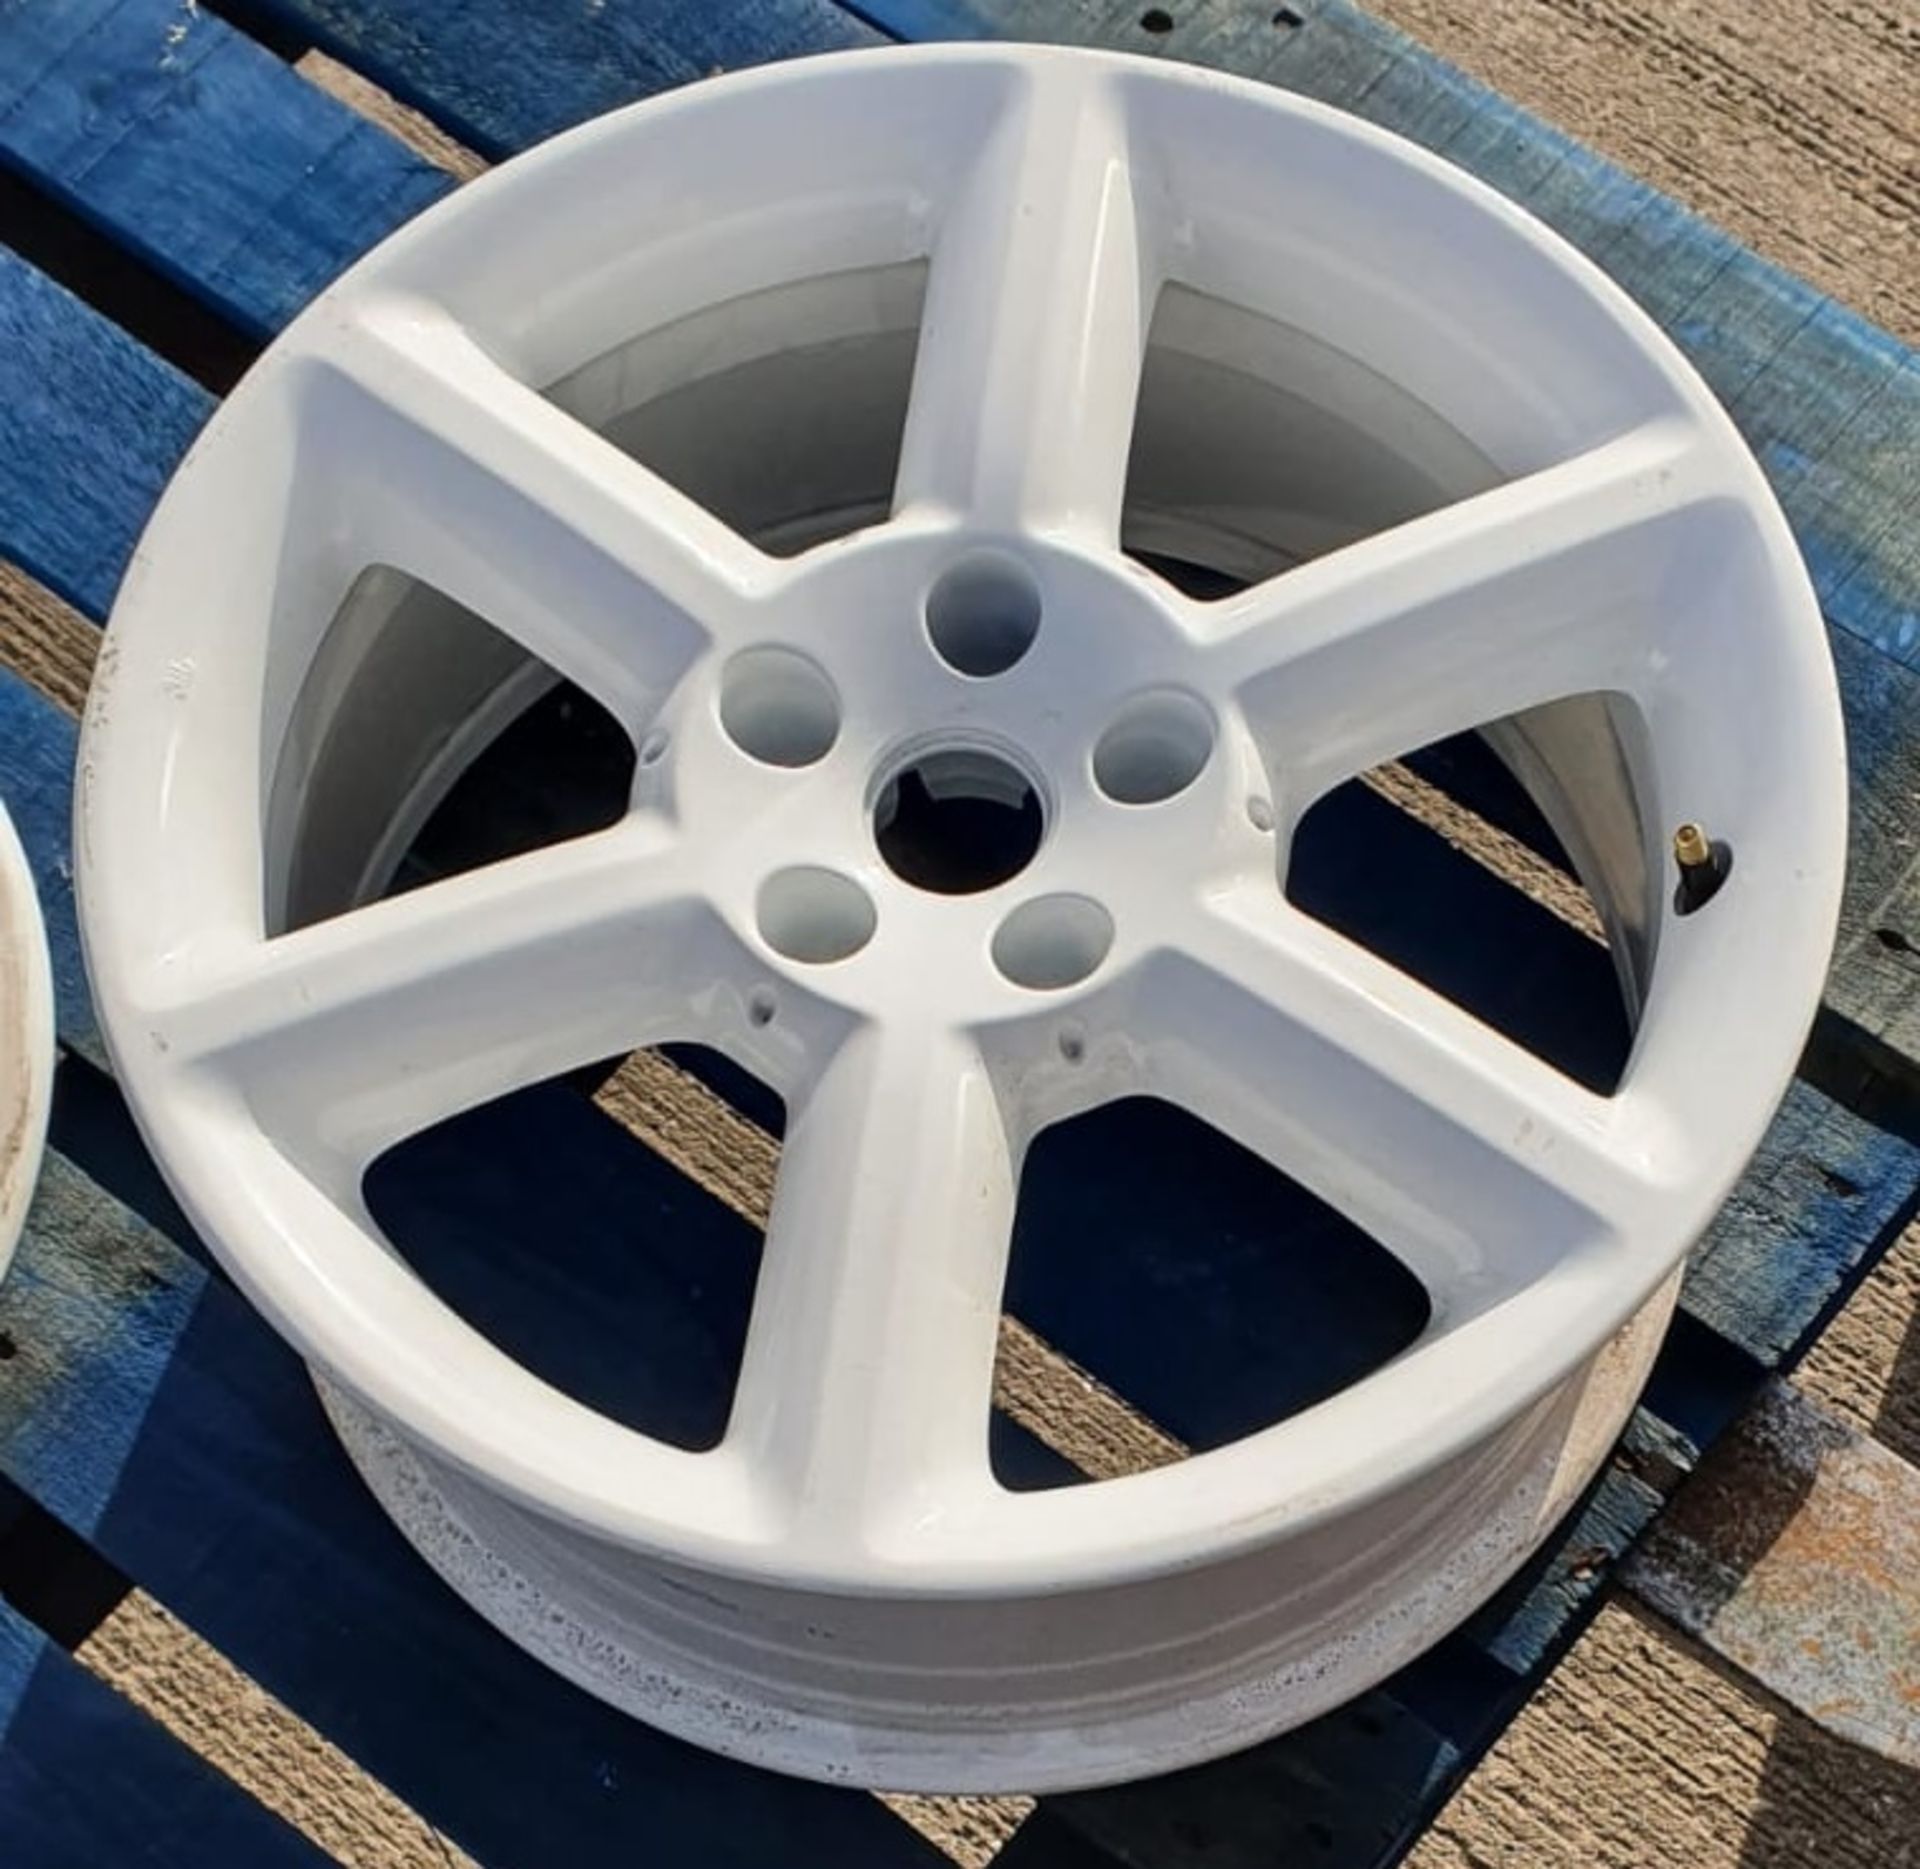 2 x Powder Coated 6-Spoke Car Wheel In White - Unused Boxed Stock - Image 4 of 5